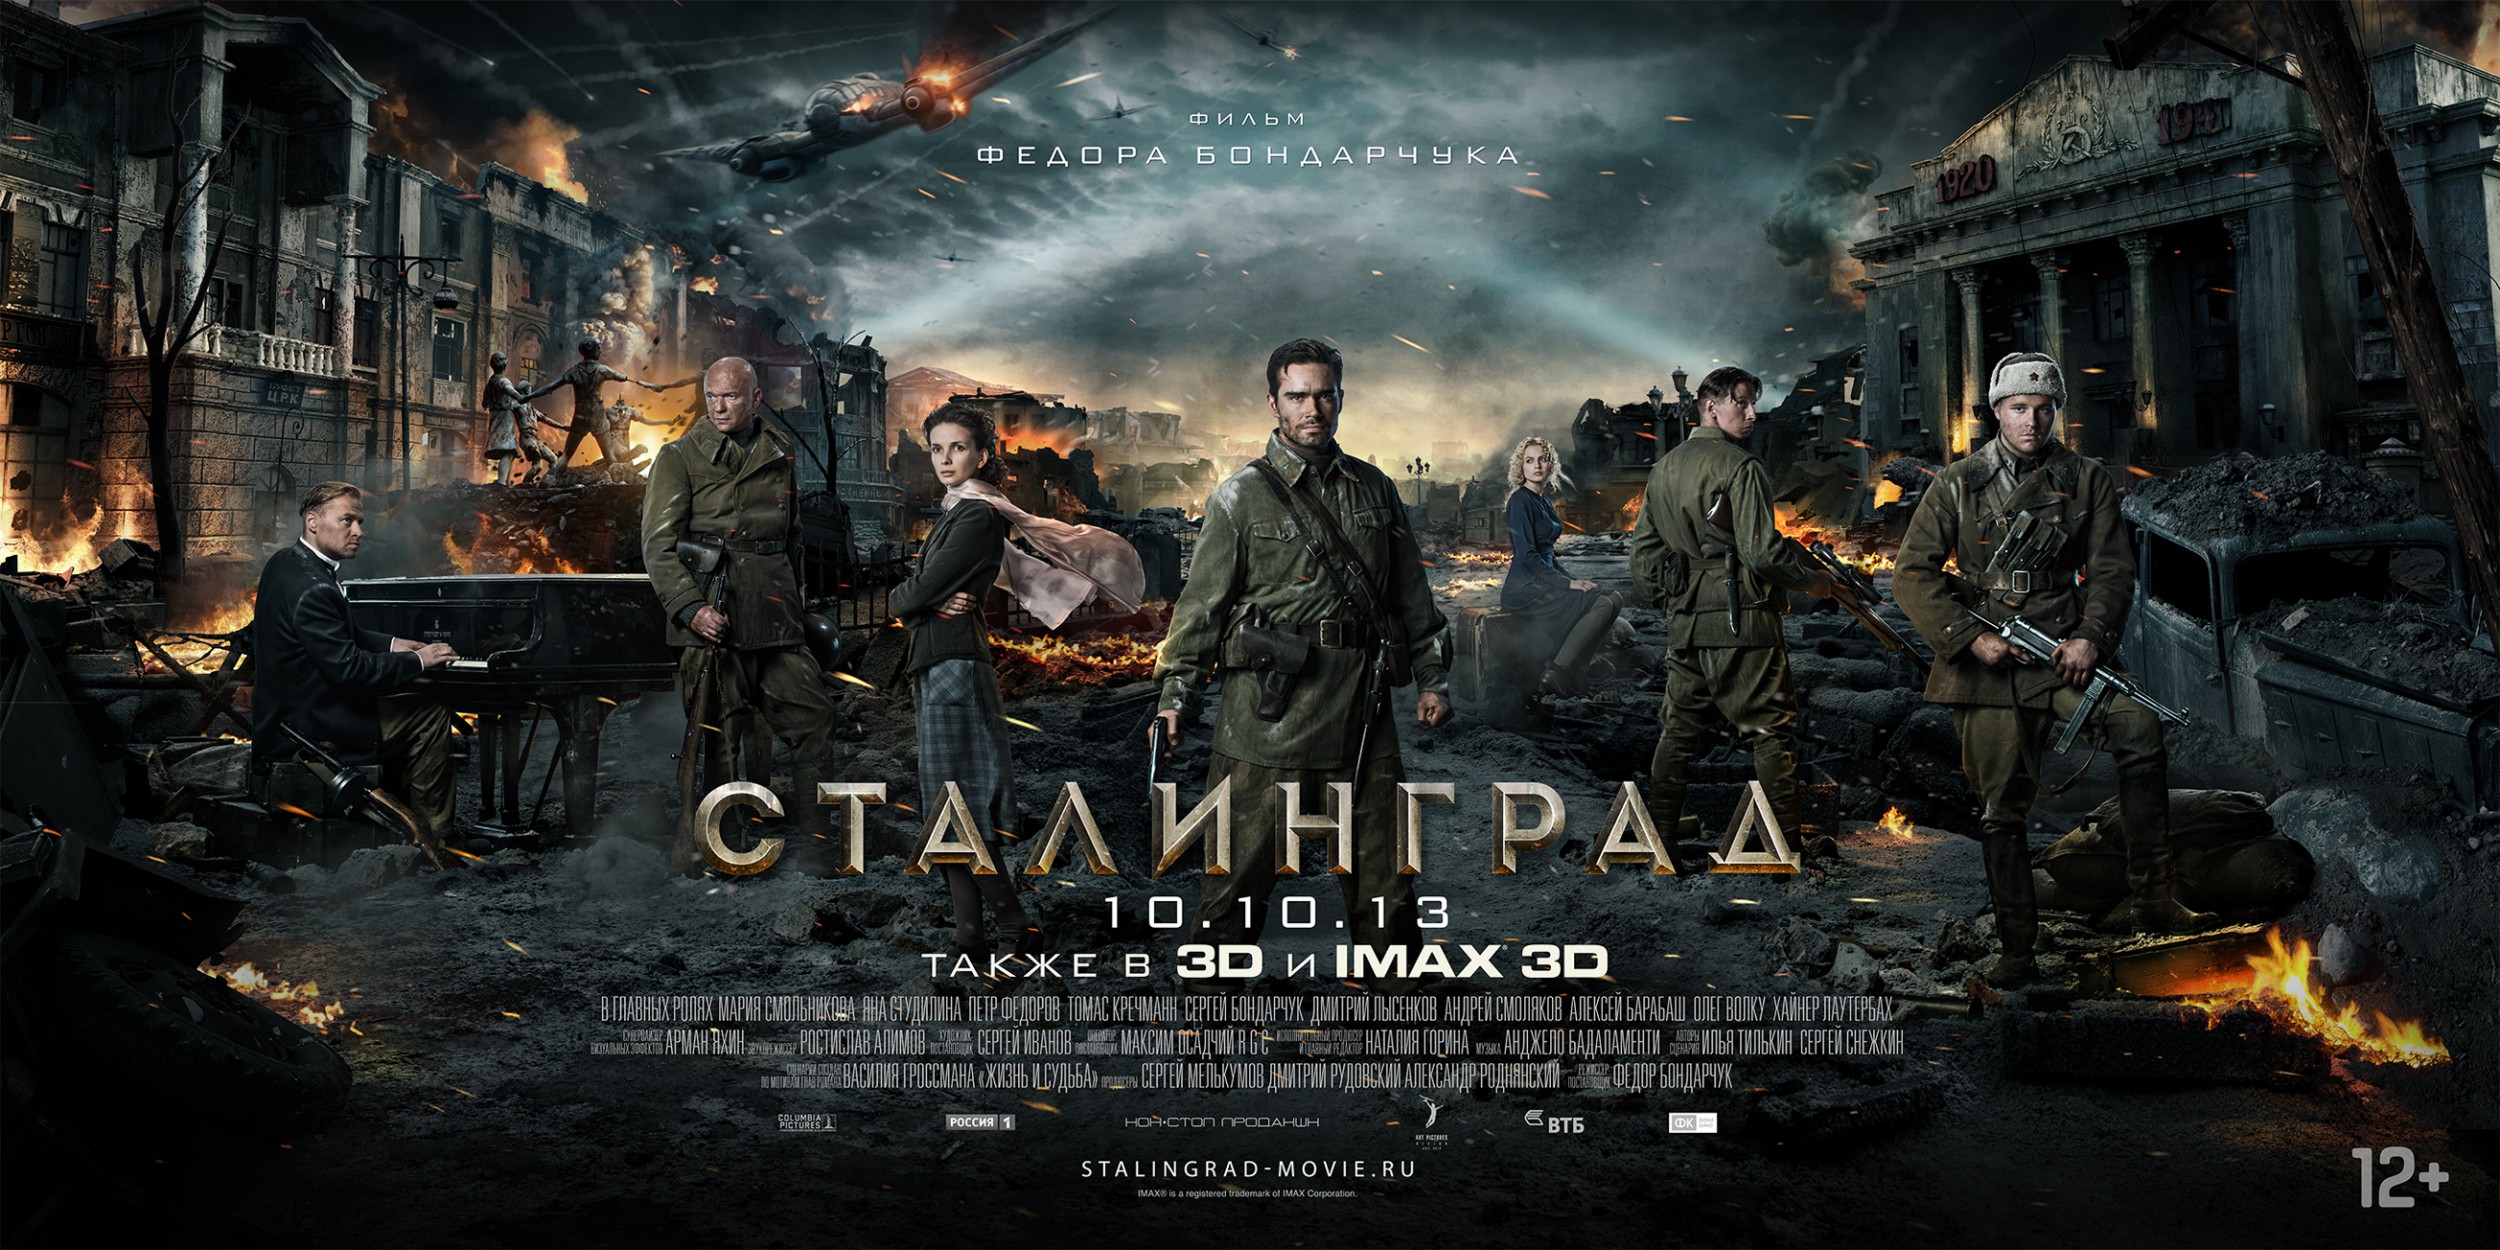 Mega Sized Movie Poster Image for Stalingrad (#2 of 10)